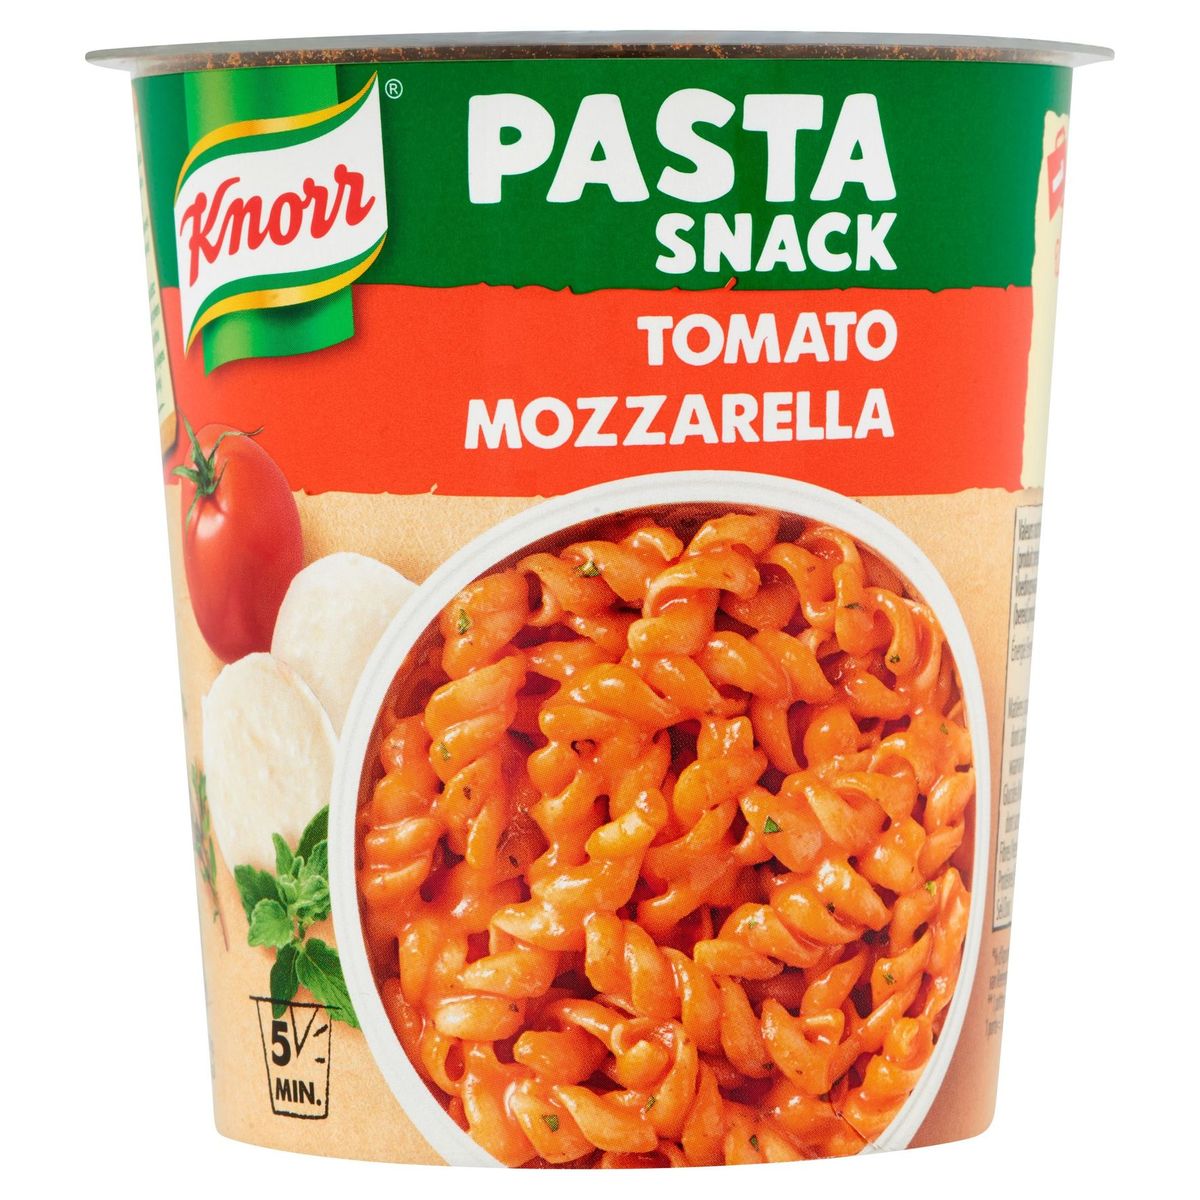 Knorr Instantanée Snack Tomato Mozarella 72 g